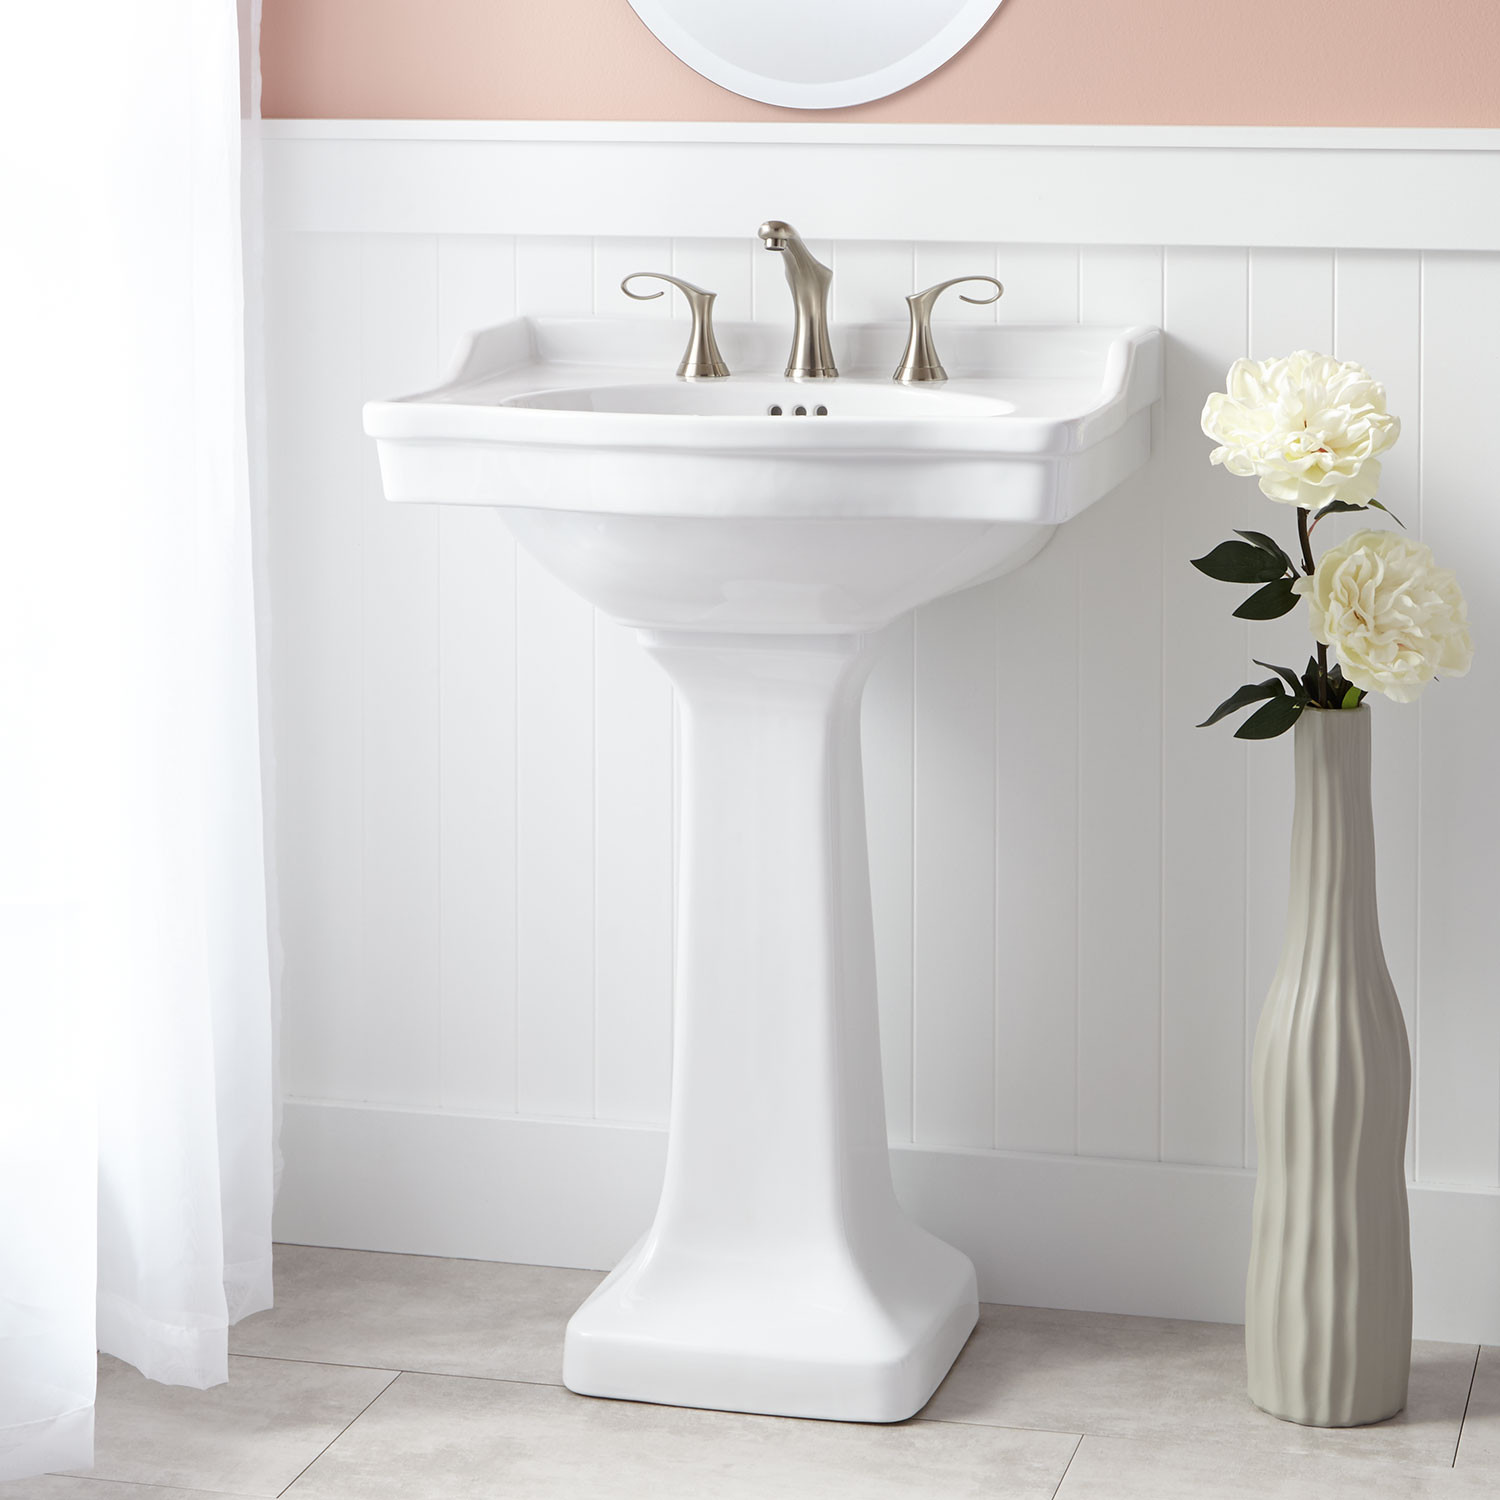 Best ideas about Pedestal Bathroom Sinks
. Save or Pin Cierra Porcelain Pedestal Sink Bathroom Now.